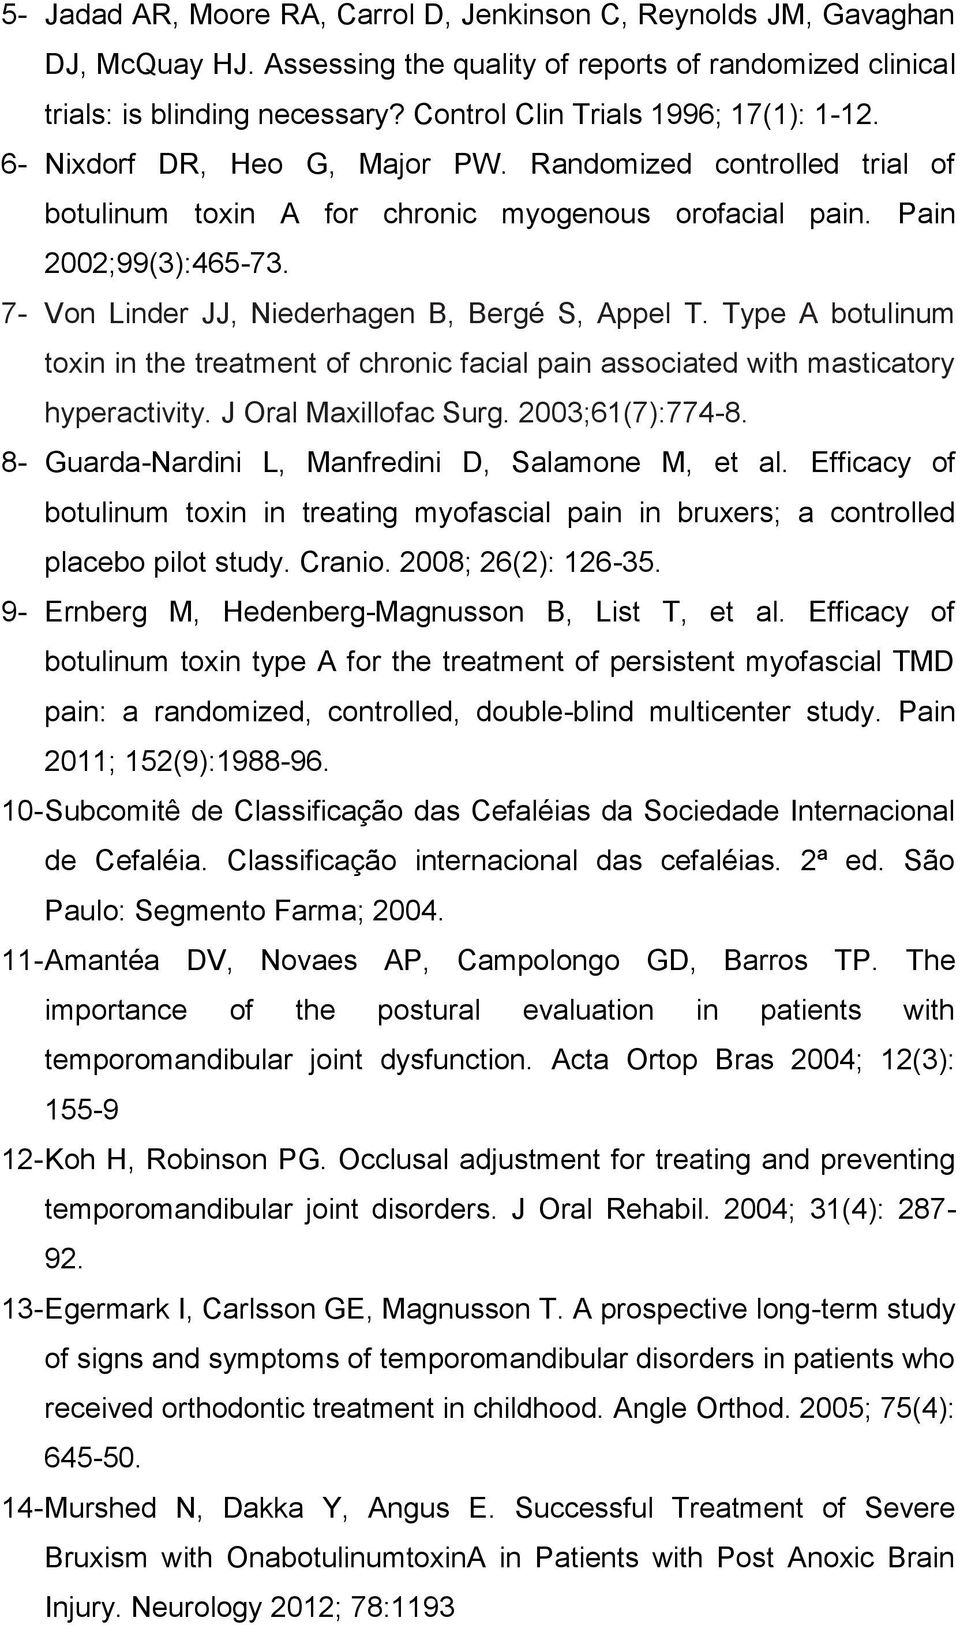 7- Von Linder JJ, Niederhagen B, Bergé S, Appel T. Type A botulinum toxin in the treatment of chronic facial pain associated with masticatory hyperactivity. J Oral Maxillofac Surg. 2003;61(7):774-8.